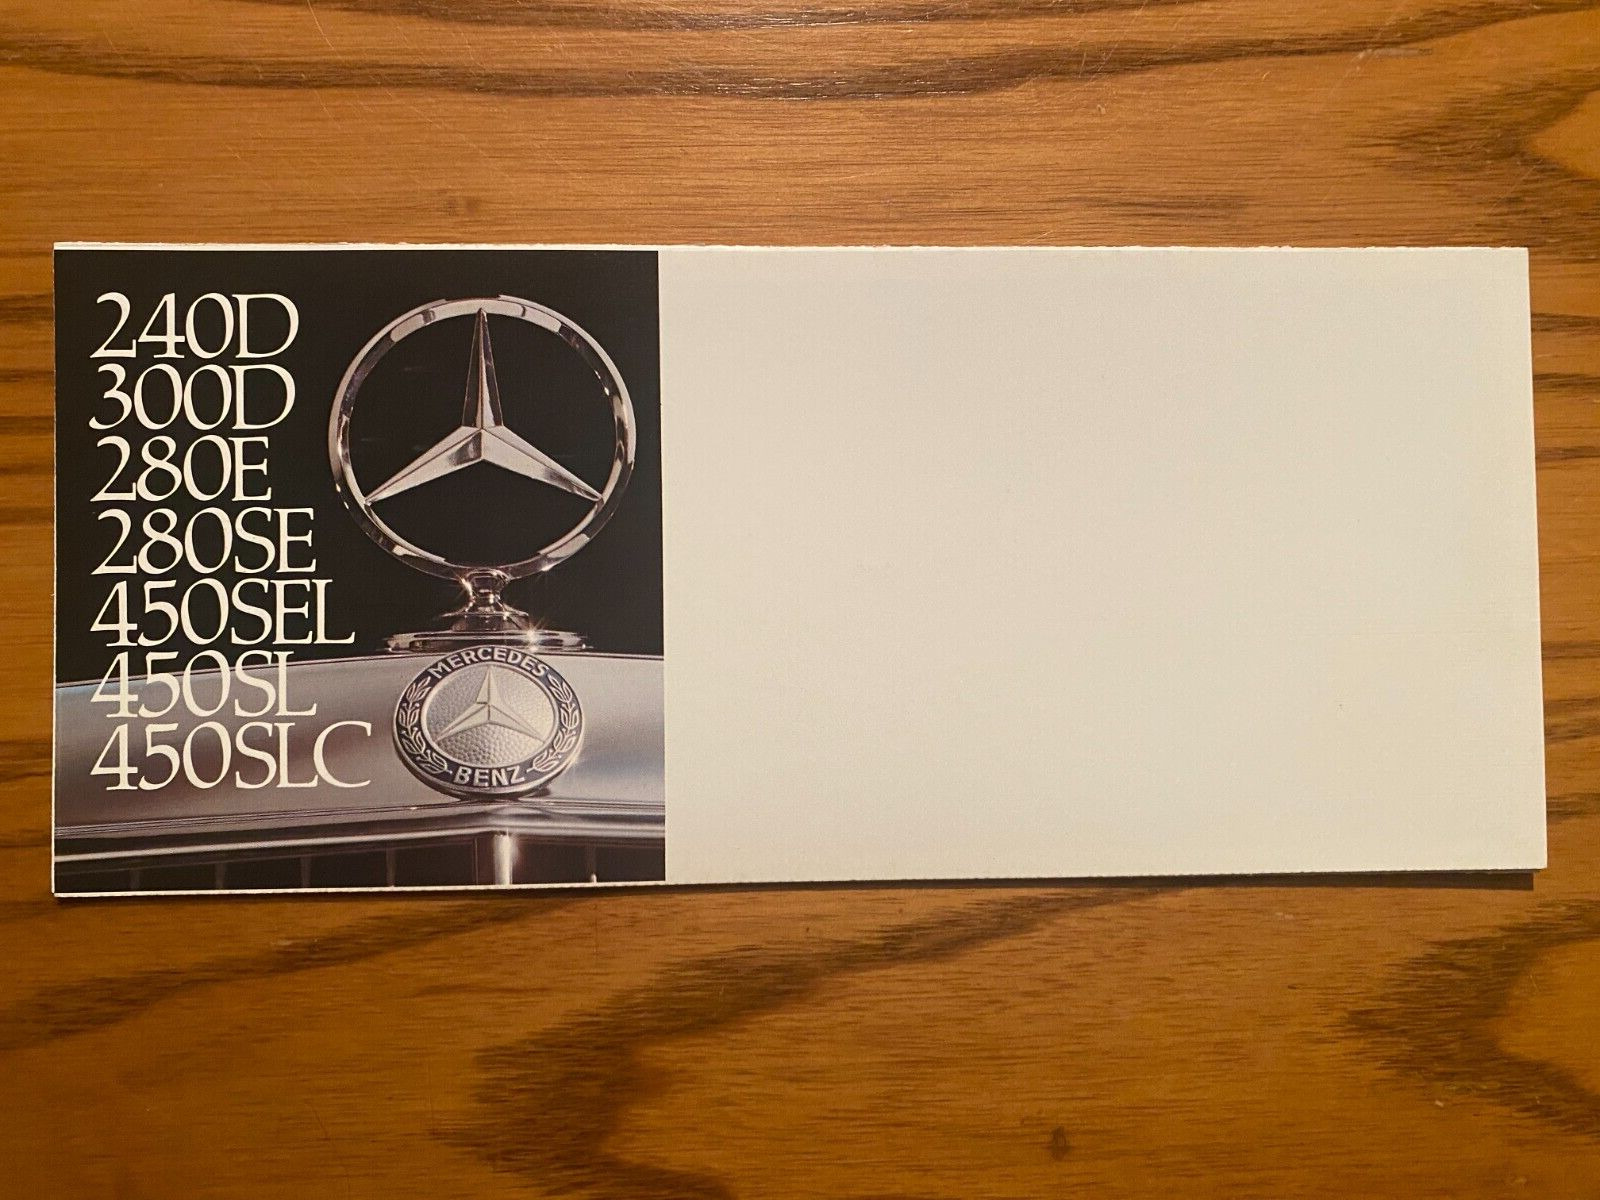 1977 Mercedes-Benz Foldout Sales Brochure - 240, 280, 300, 450 Series Gas/Diesel